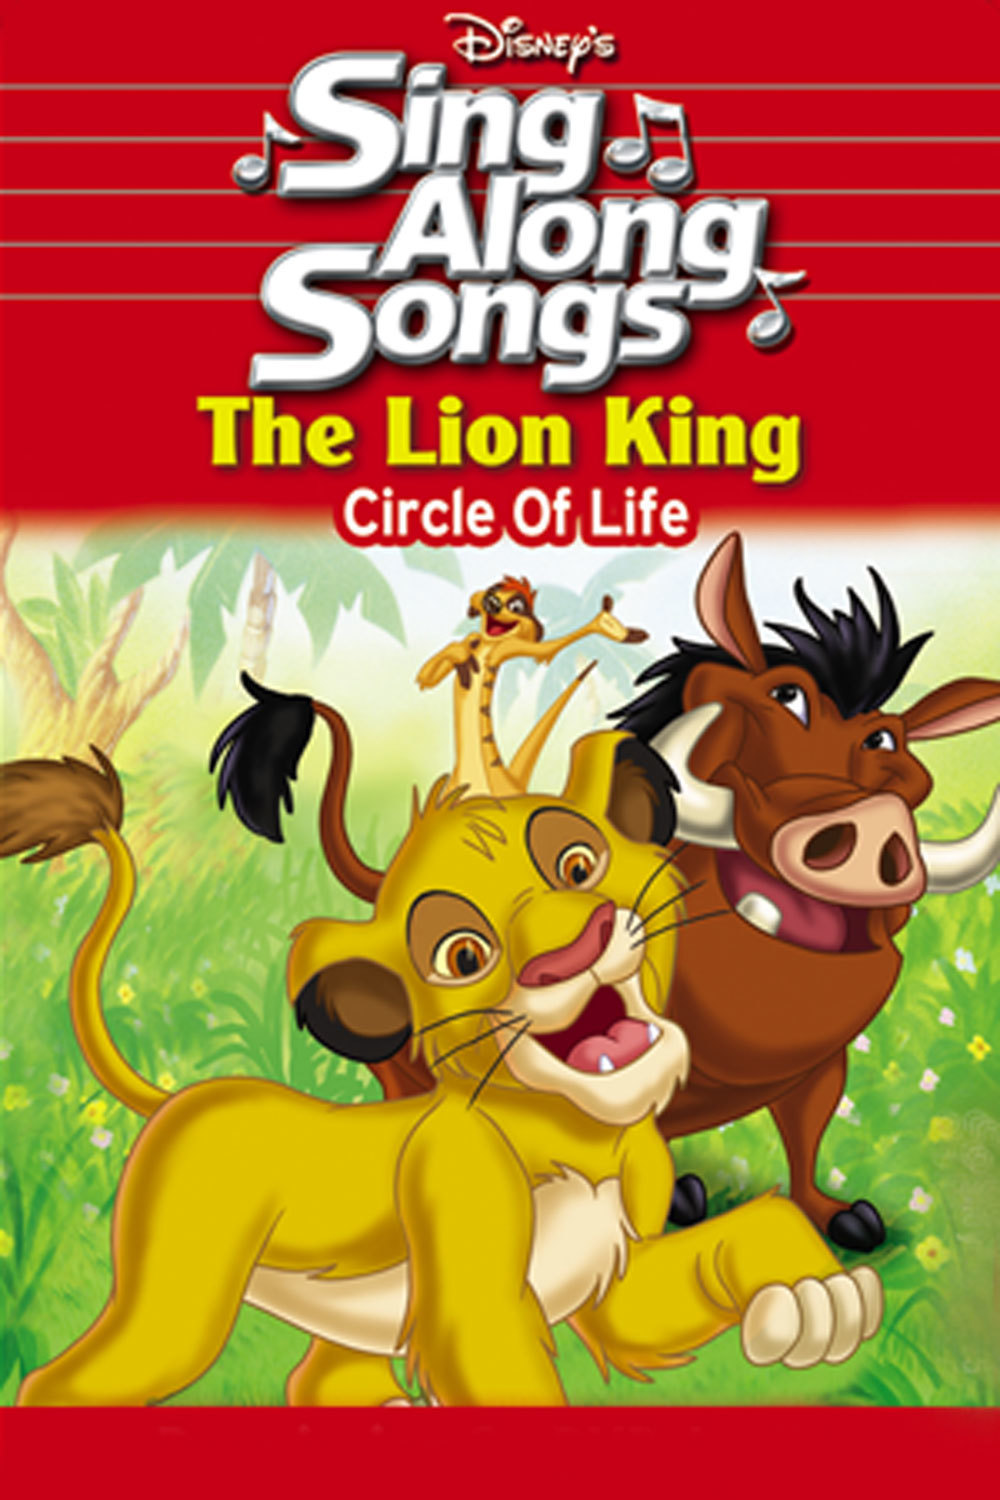 The lion king 1994)   imdb